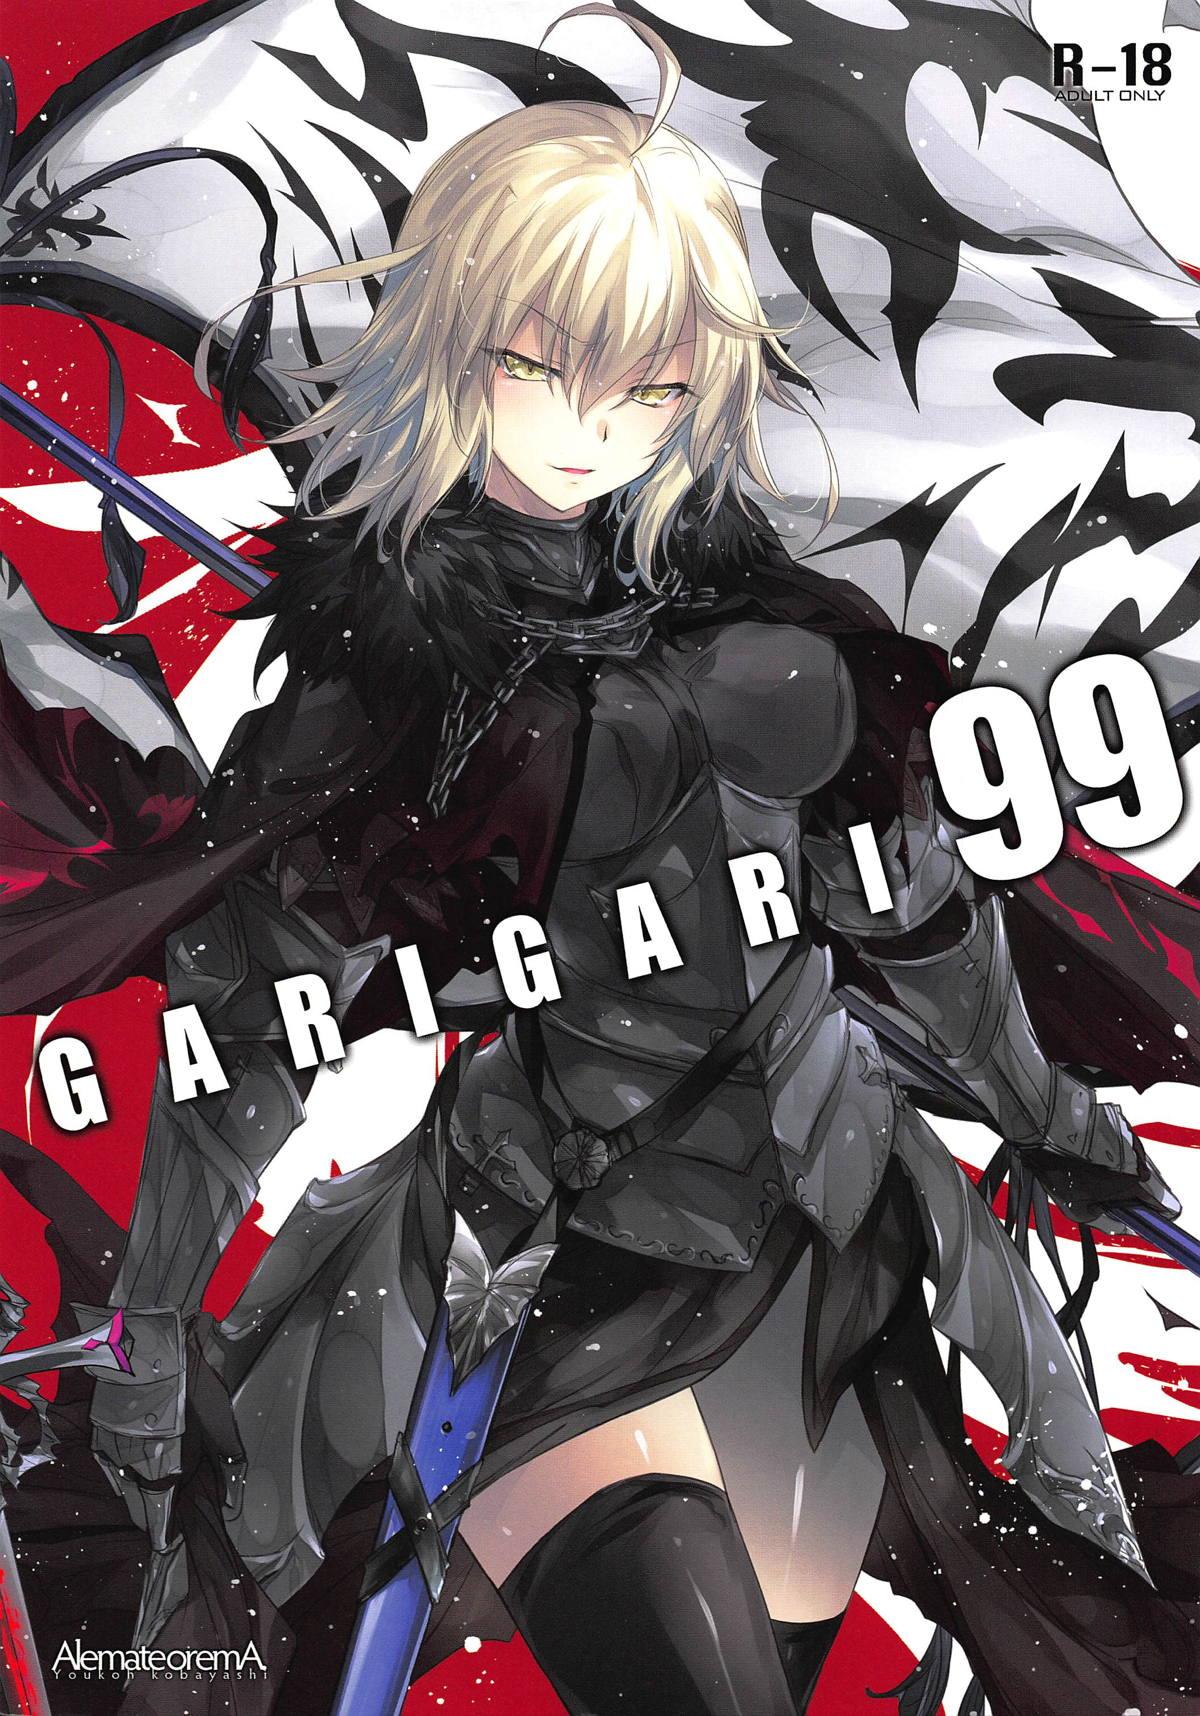 Load GARIGARI 99 - Fate grand order Livecam - Picture 1